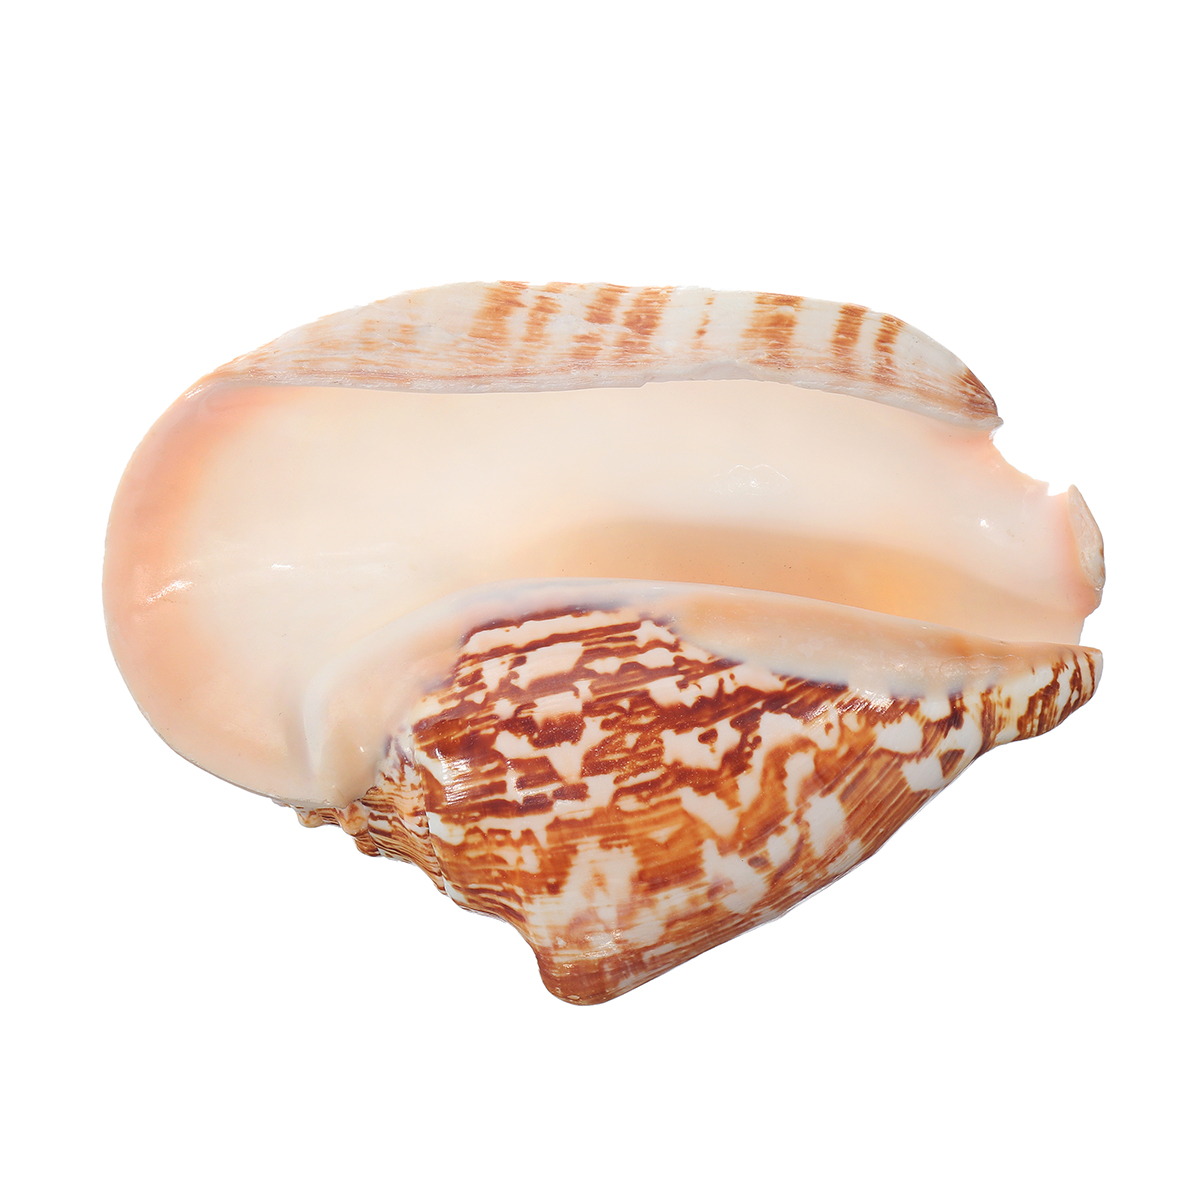 Ракушка ушко. Свеча коралловая Ракушка. Как называется Ракушка с ушками. Seashell Ear Tabs. Натуральная ракушка